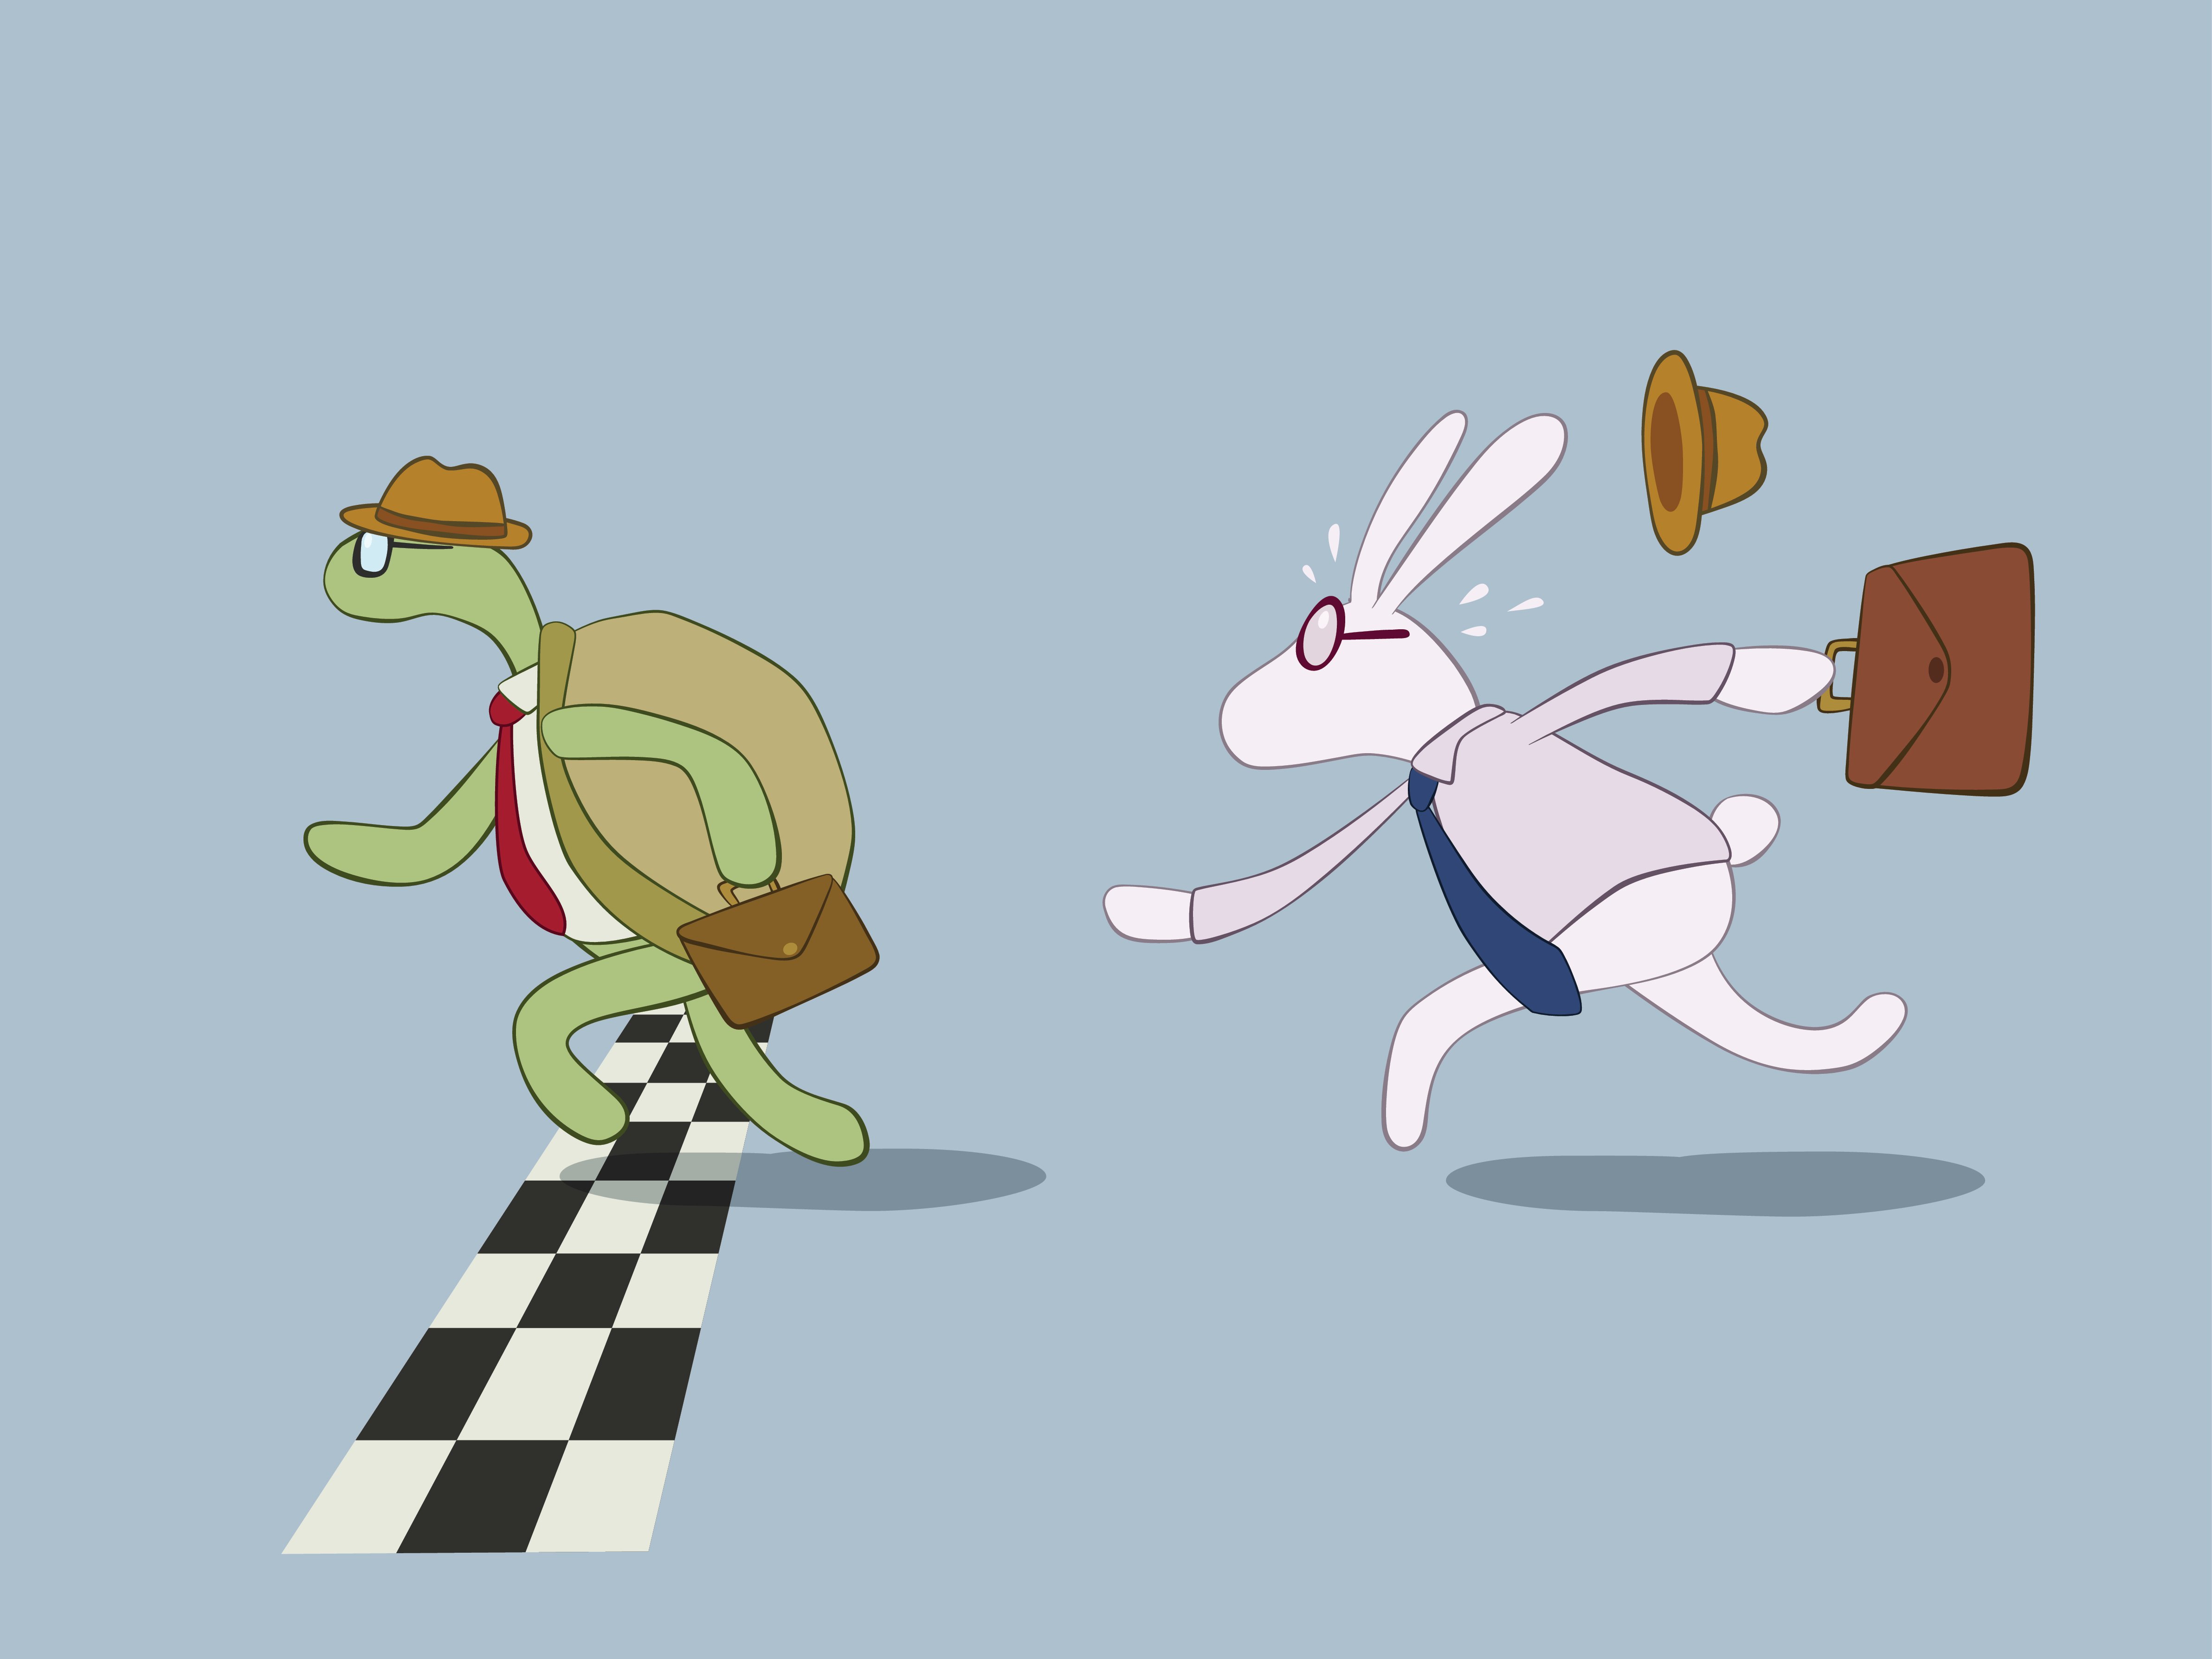 turtle crossing finish line bfore rabbit